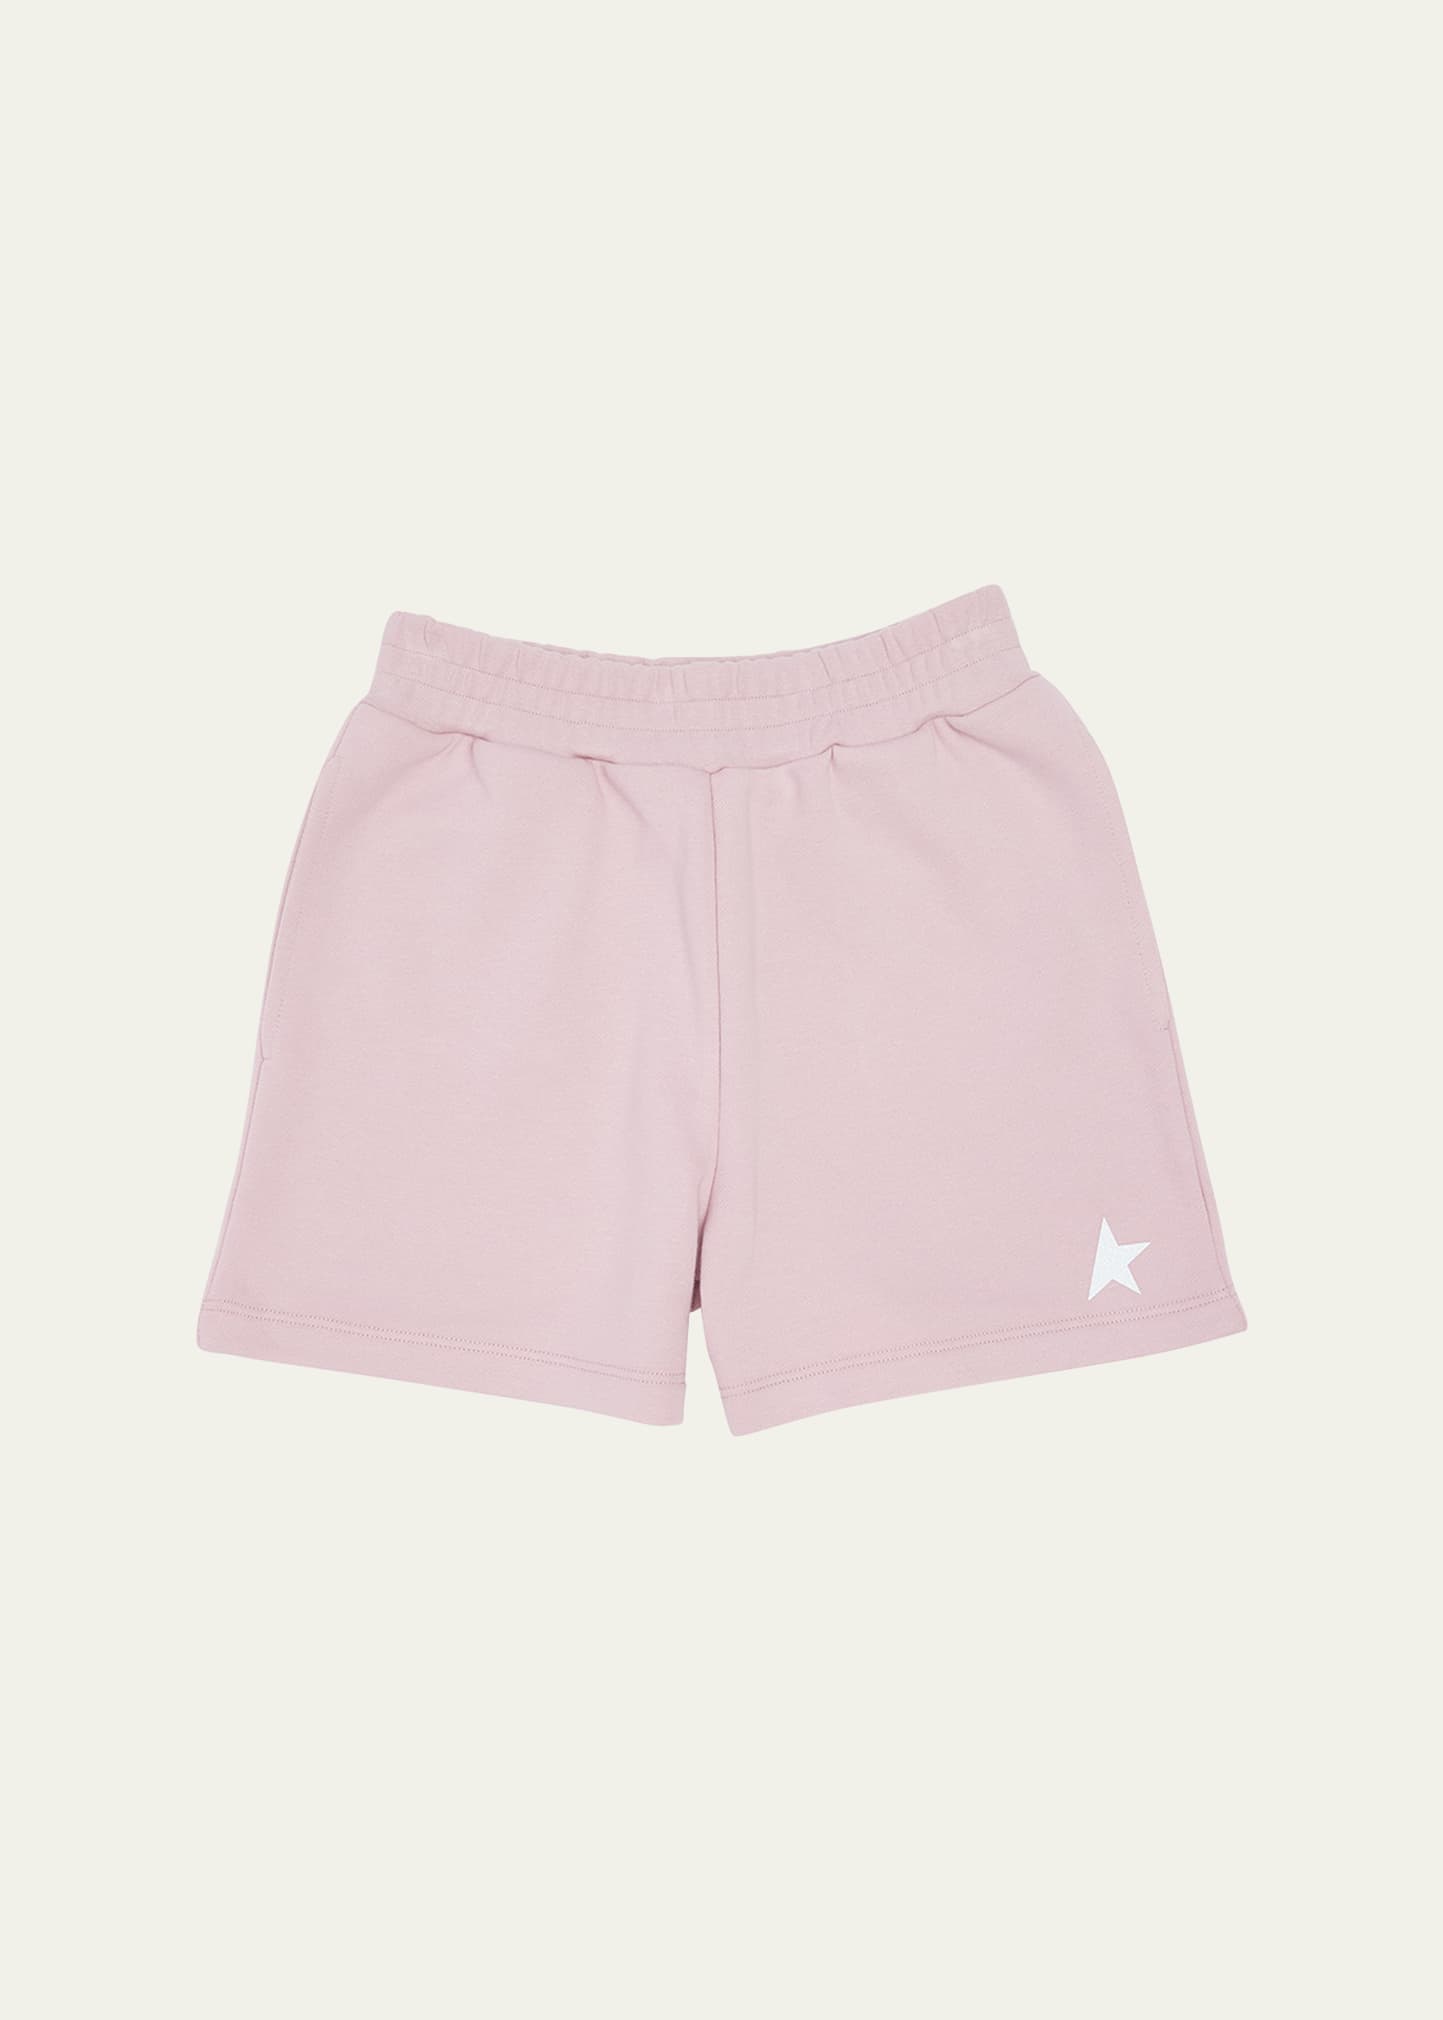 Girl's Star-Printed Fleece Shorts, Size 4-10